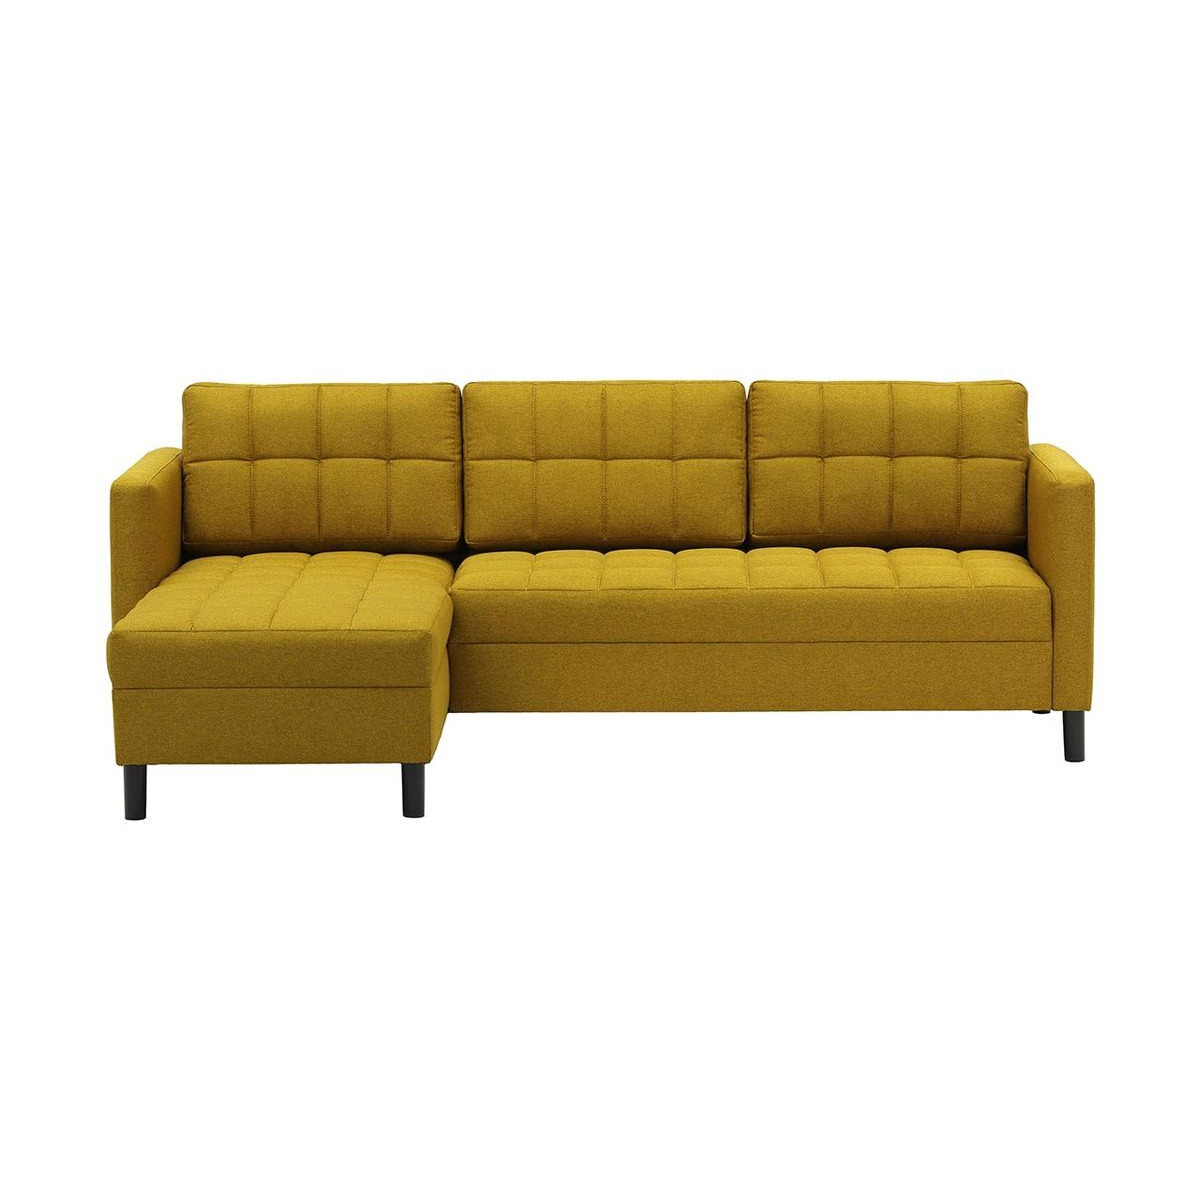 Ludo Universal Corner Sofa Bed, mustard - image 1